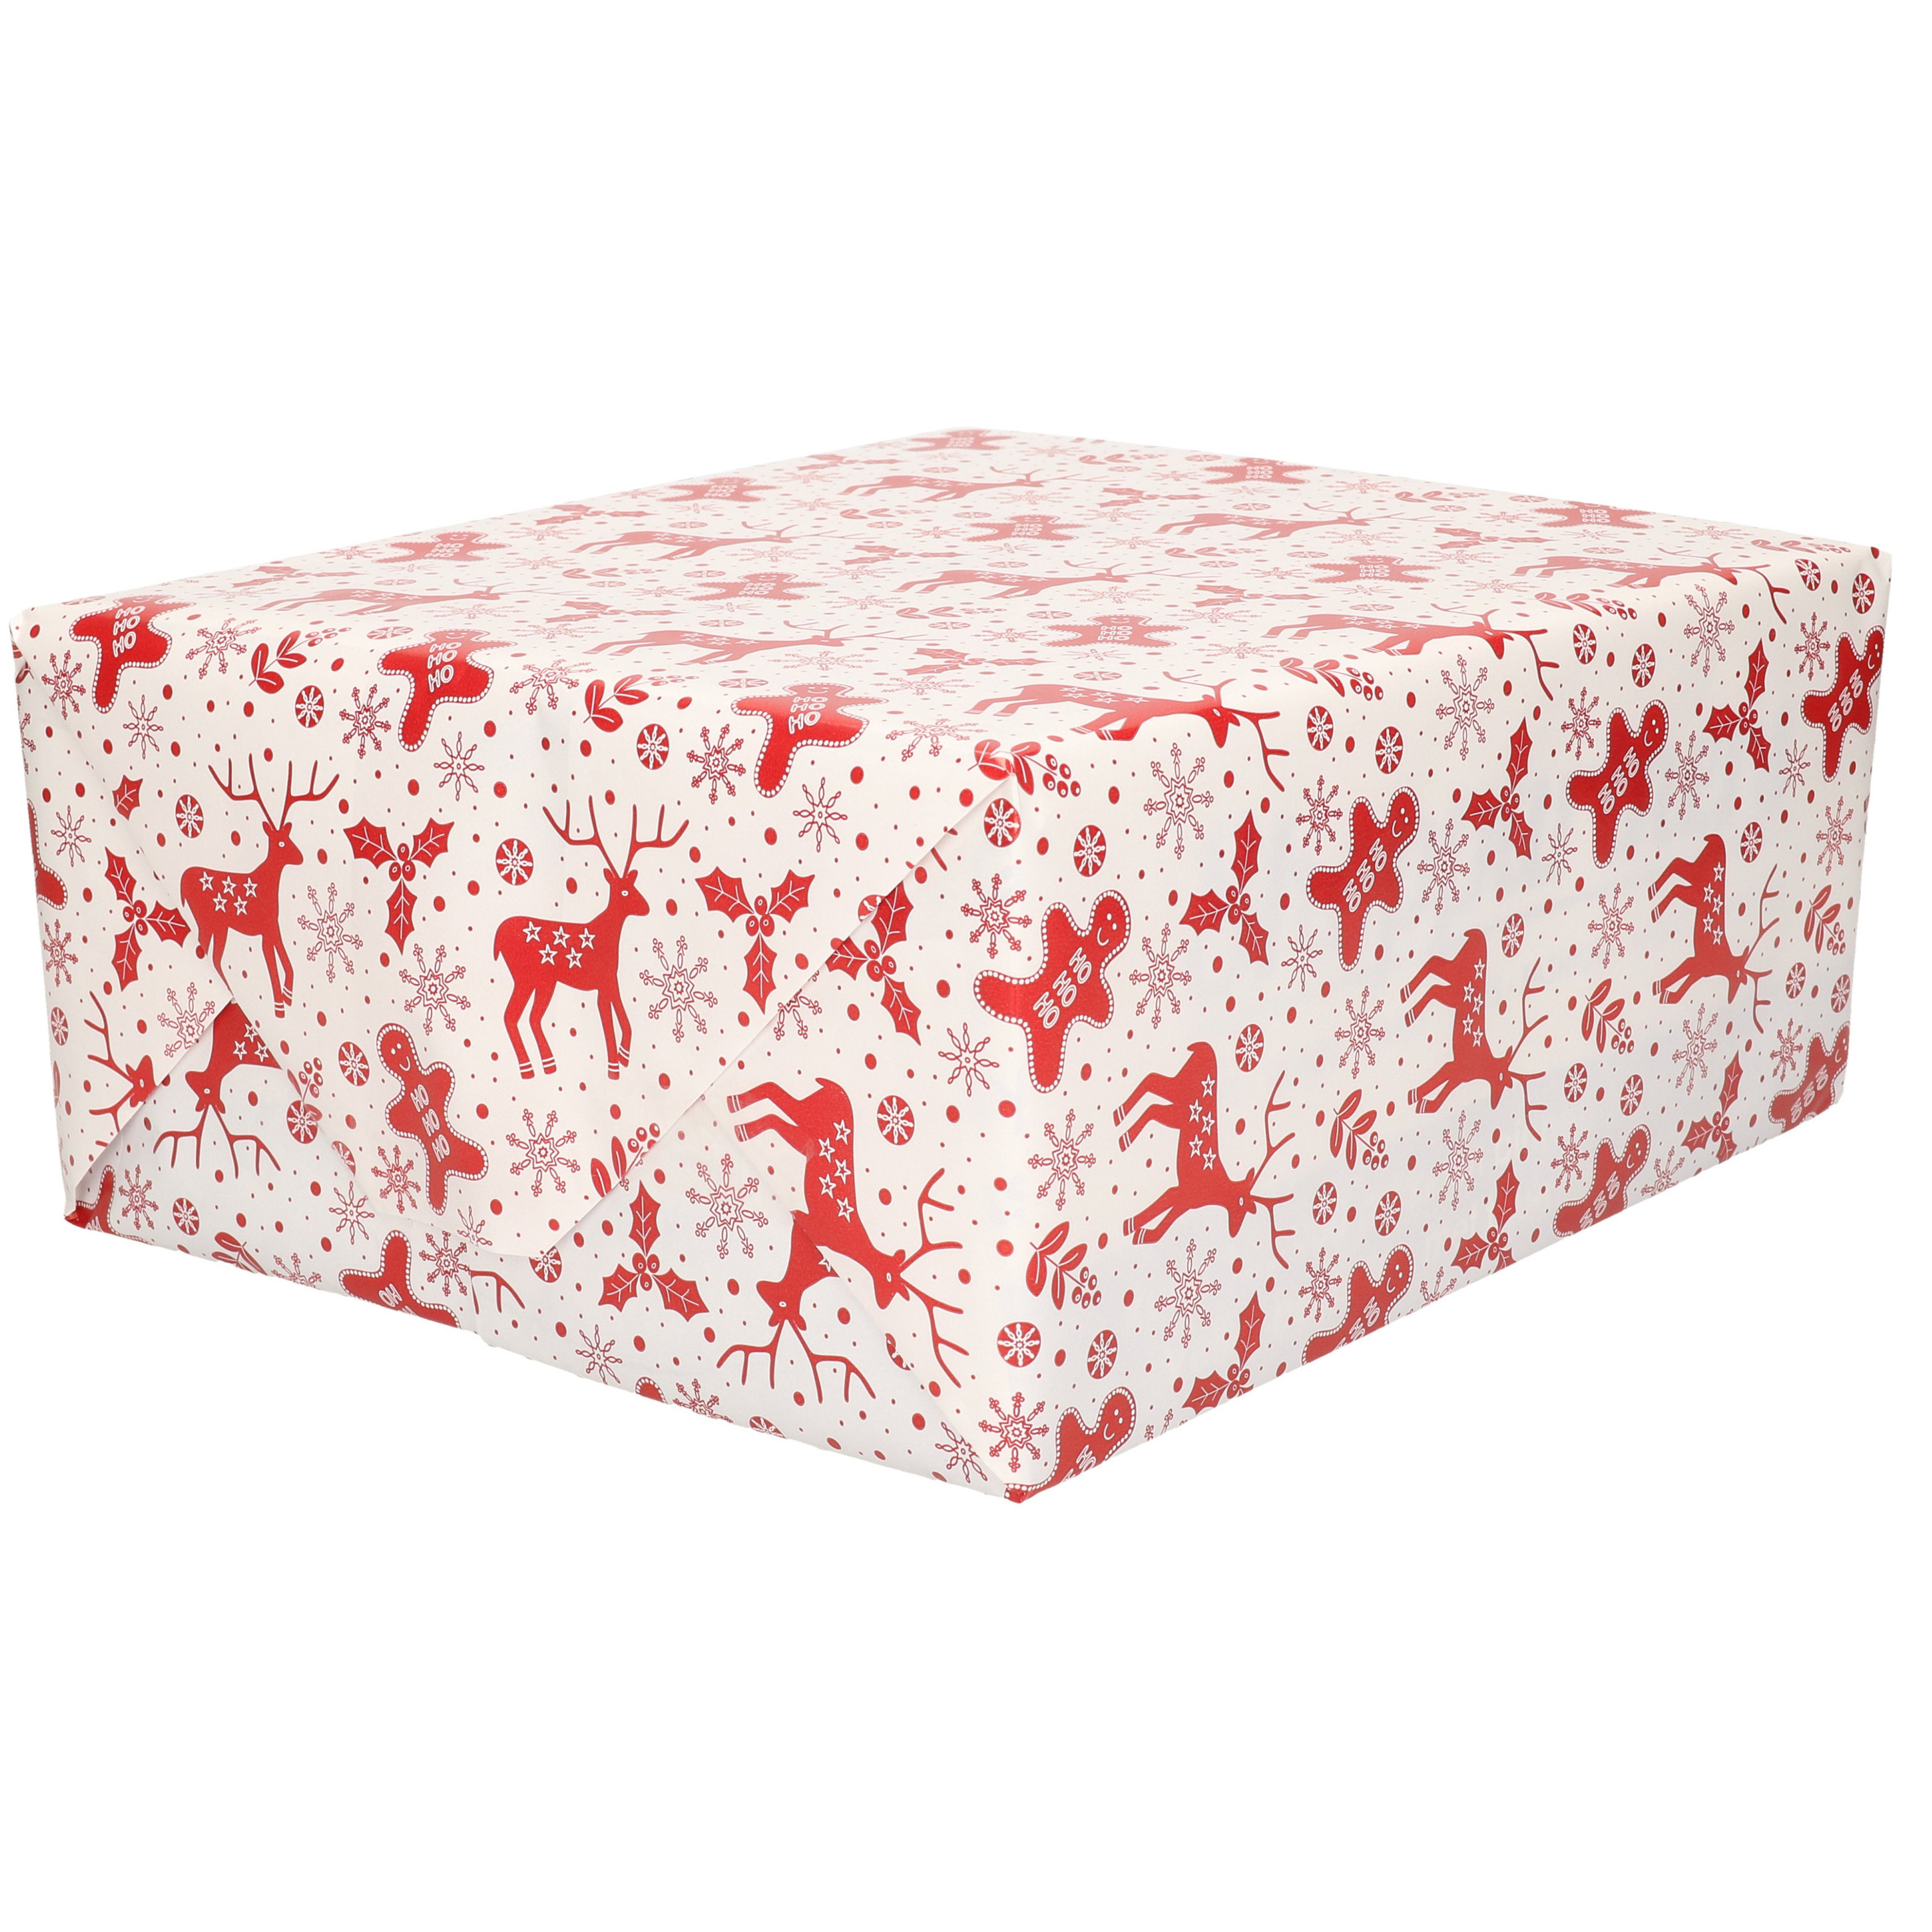 5x Rollen Kerst inpakpapier/cadeaupapier wit/rood 2,5 x 0,7 meter